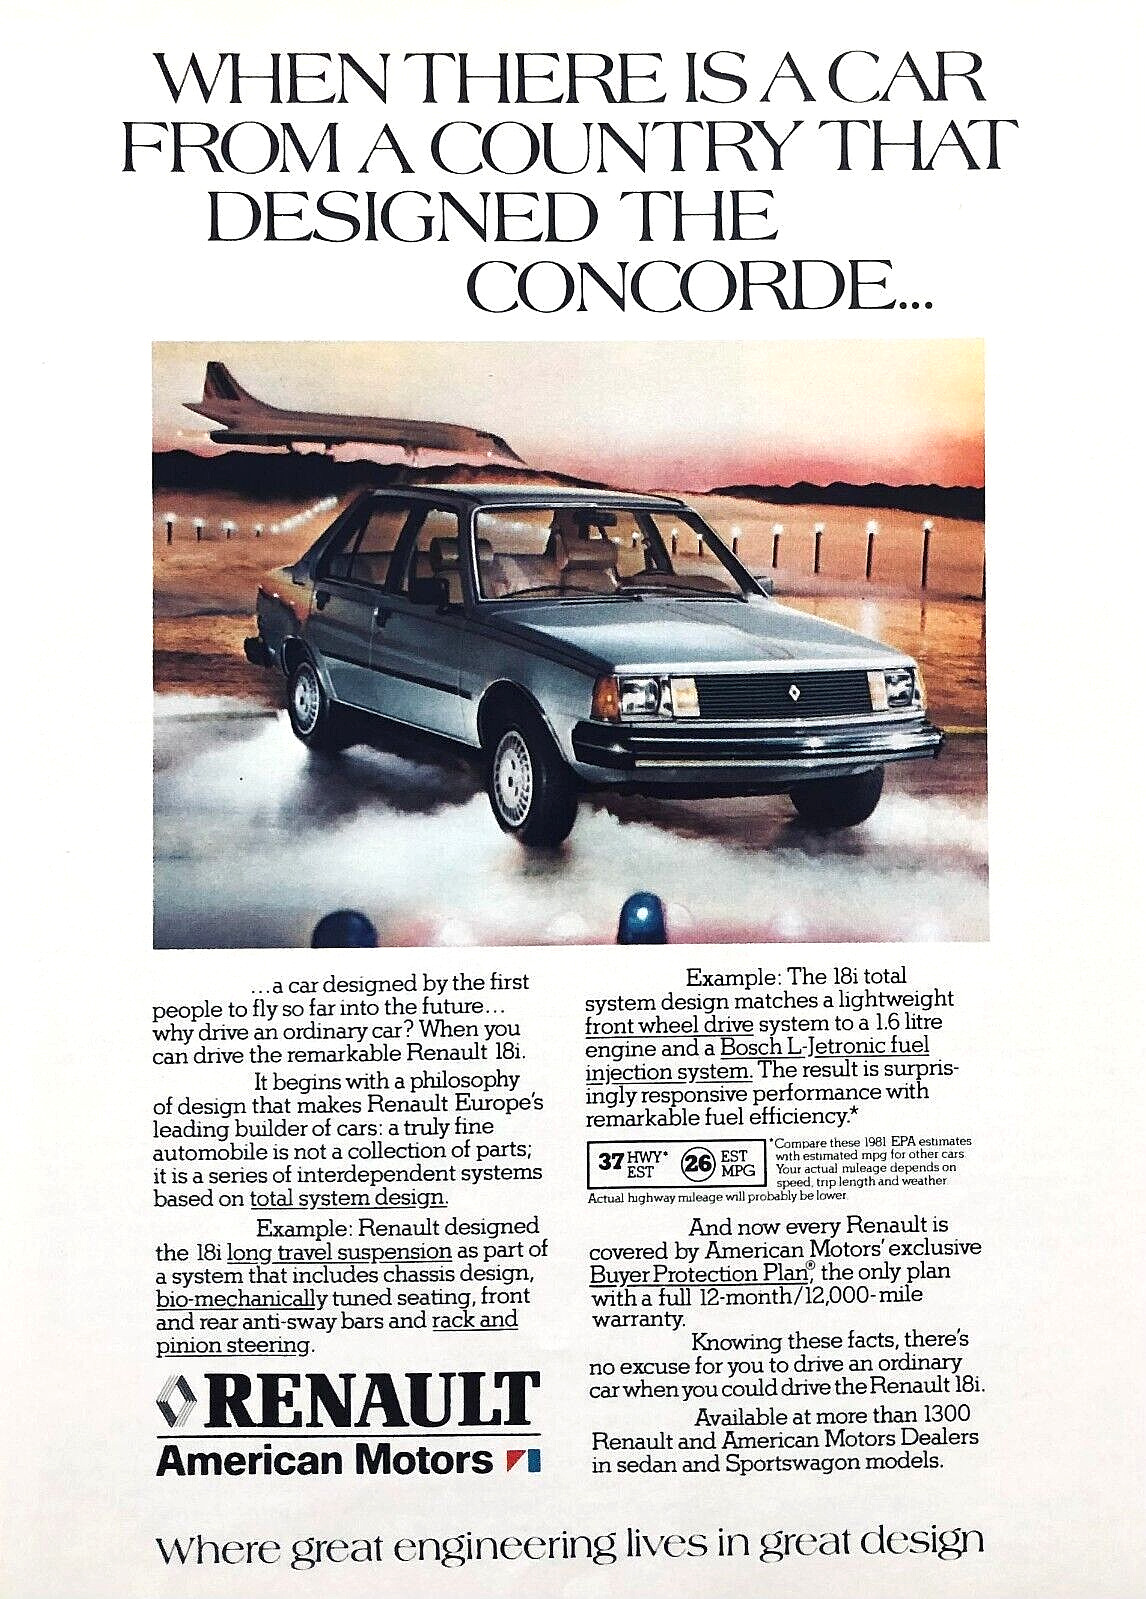 1982 AMC RENAULT 18i SEDAN—CONCORDE SST—MAGAZINE ADVERTISEMENT—ORIGINAL PRINT AD